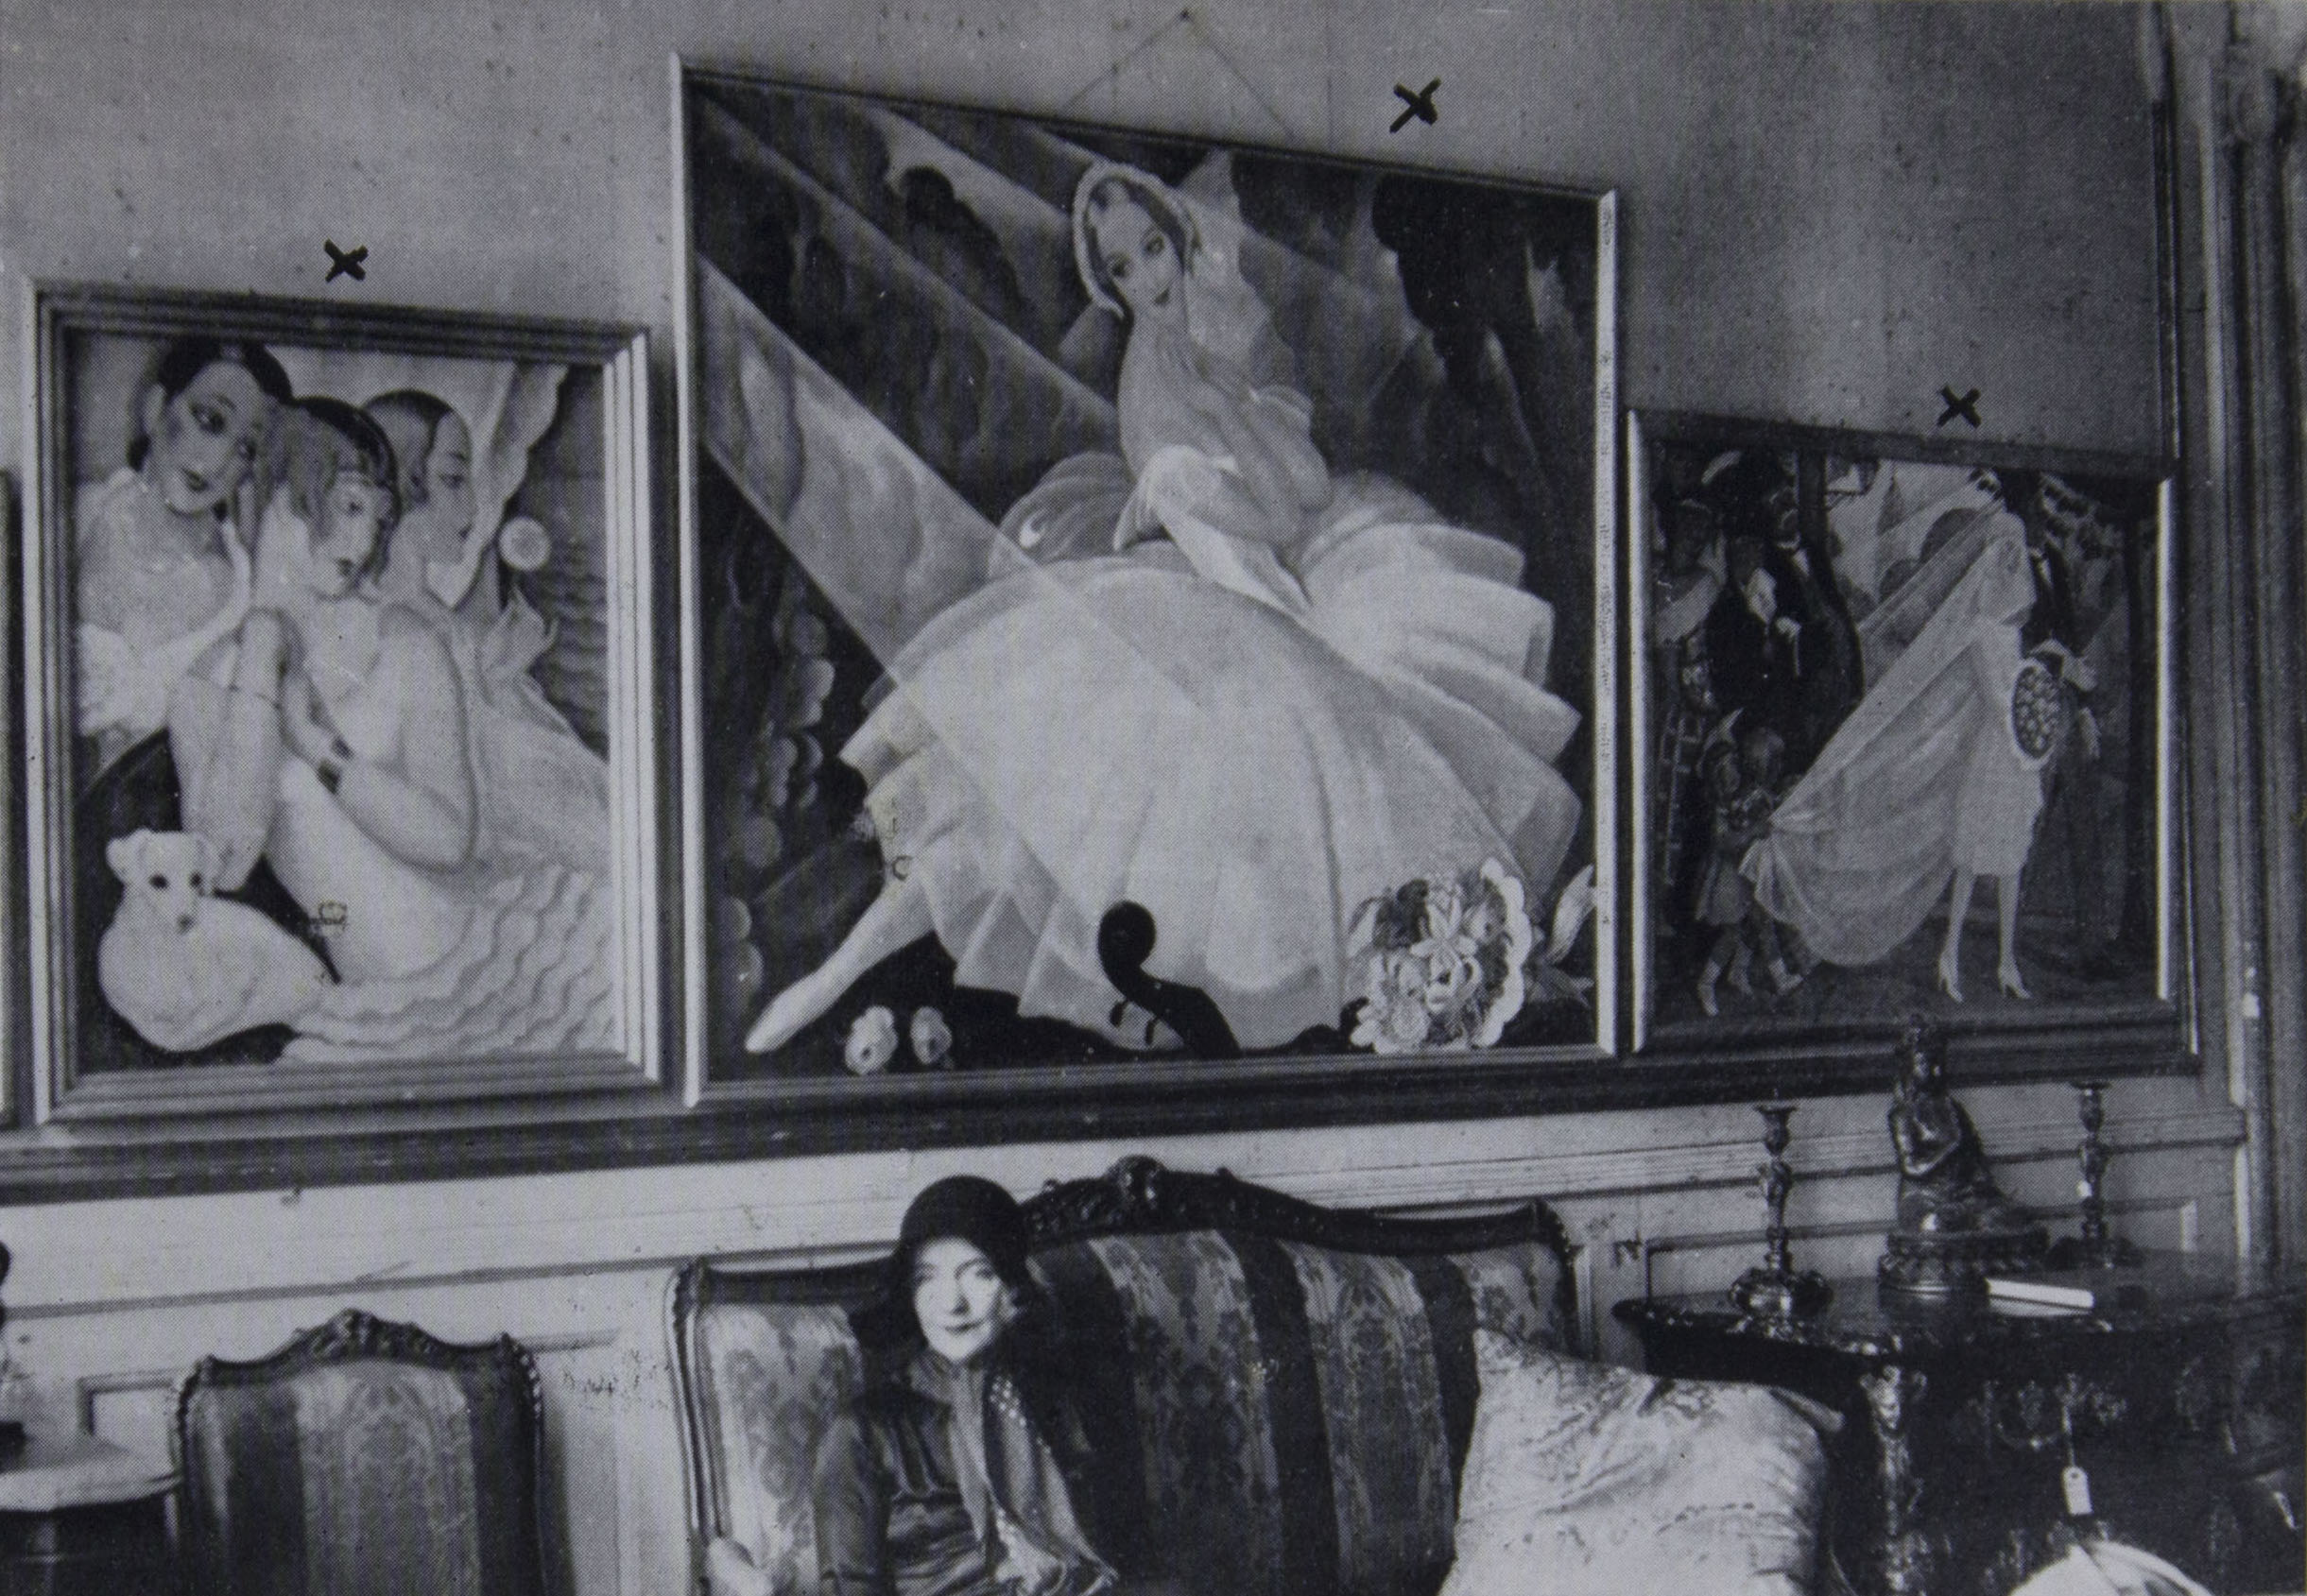 
                  GERDA WEGENER (GRETE SPARRE) AND THREE OF HER
                        PICTURES